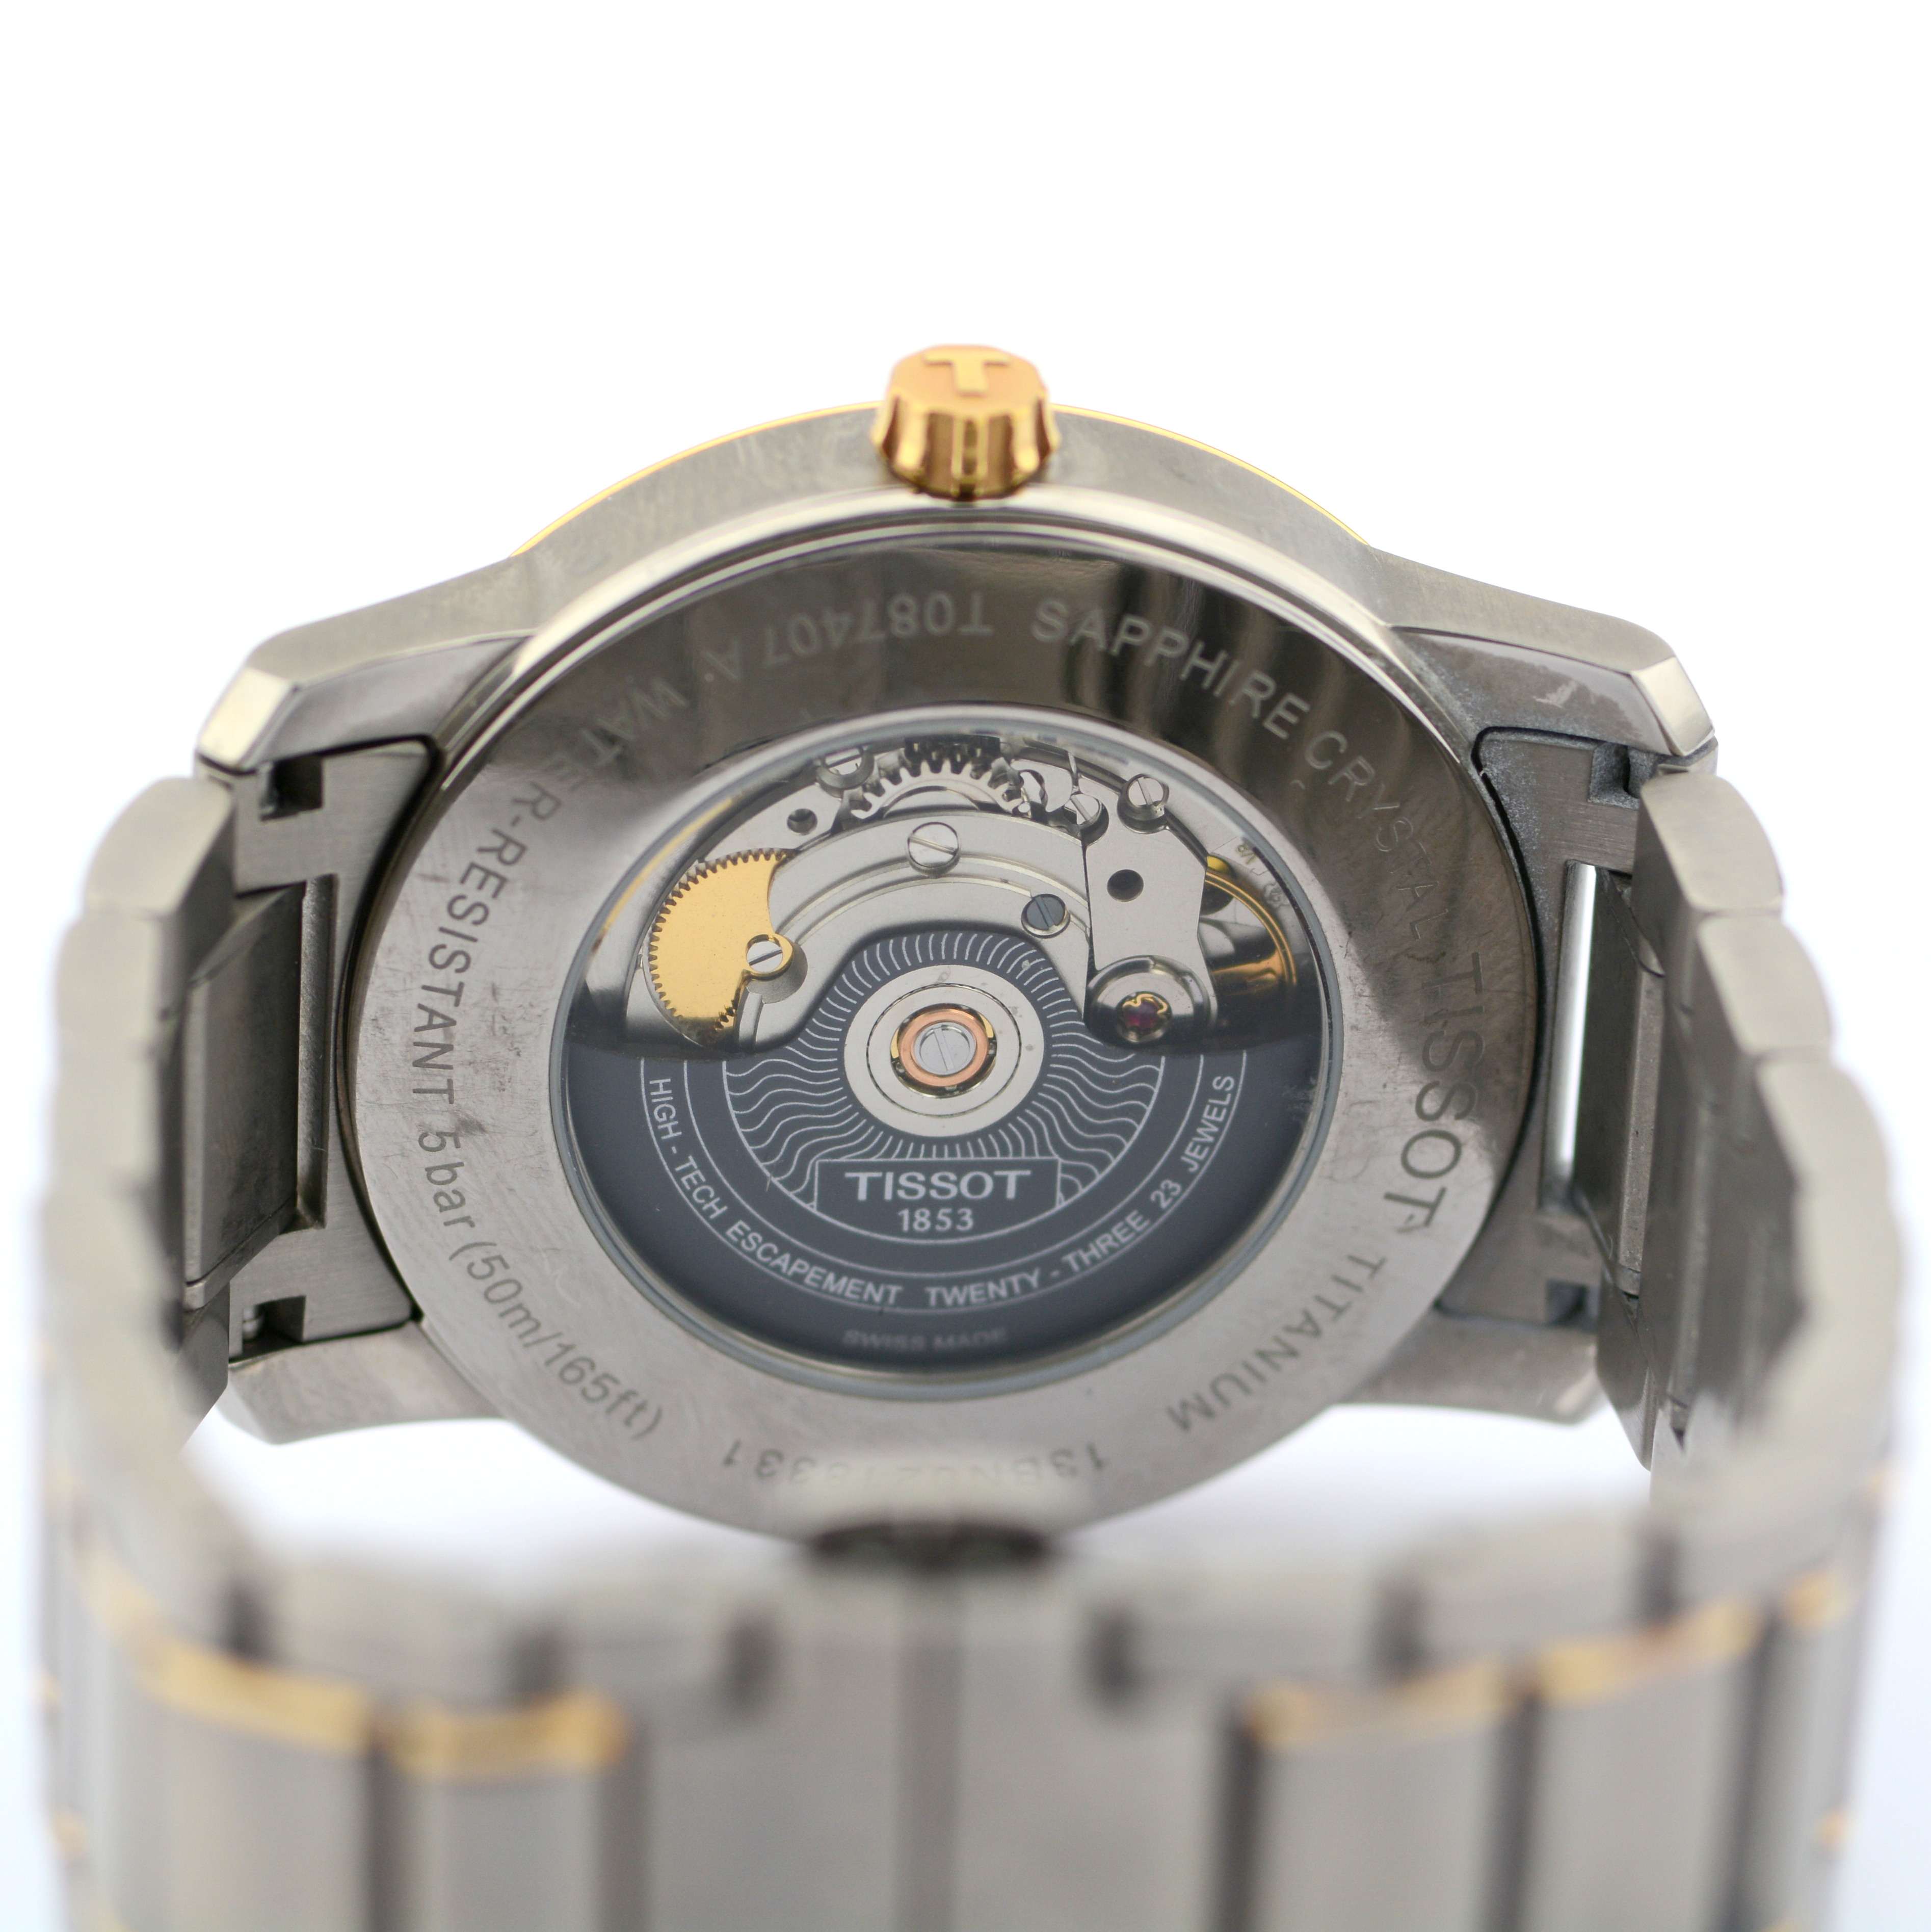 Tissot / Powermatic 80 Date - Automatic - Titanium - Gentlmen's Steel Wrist Watch - Image 7 of 9